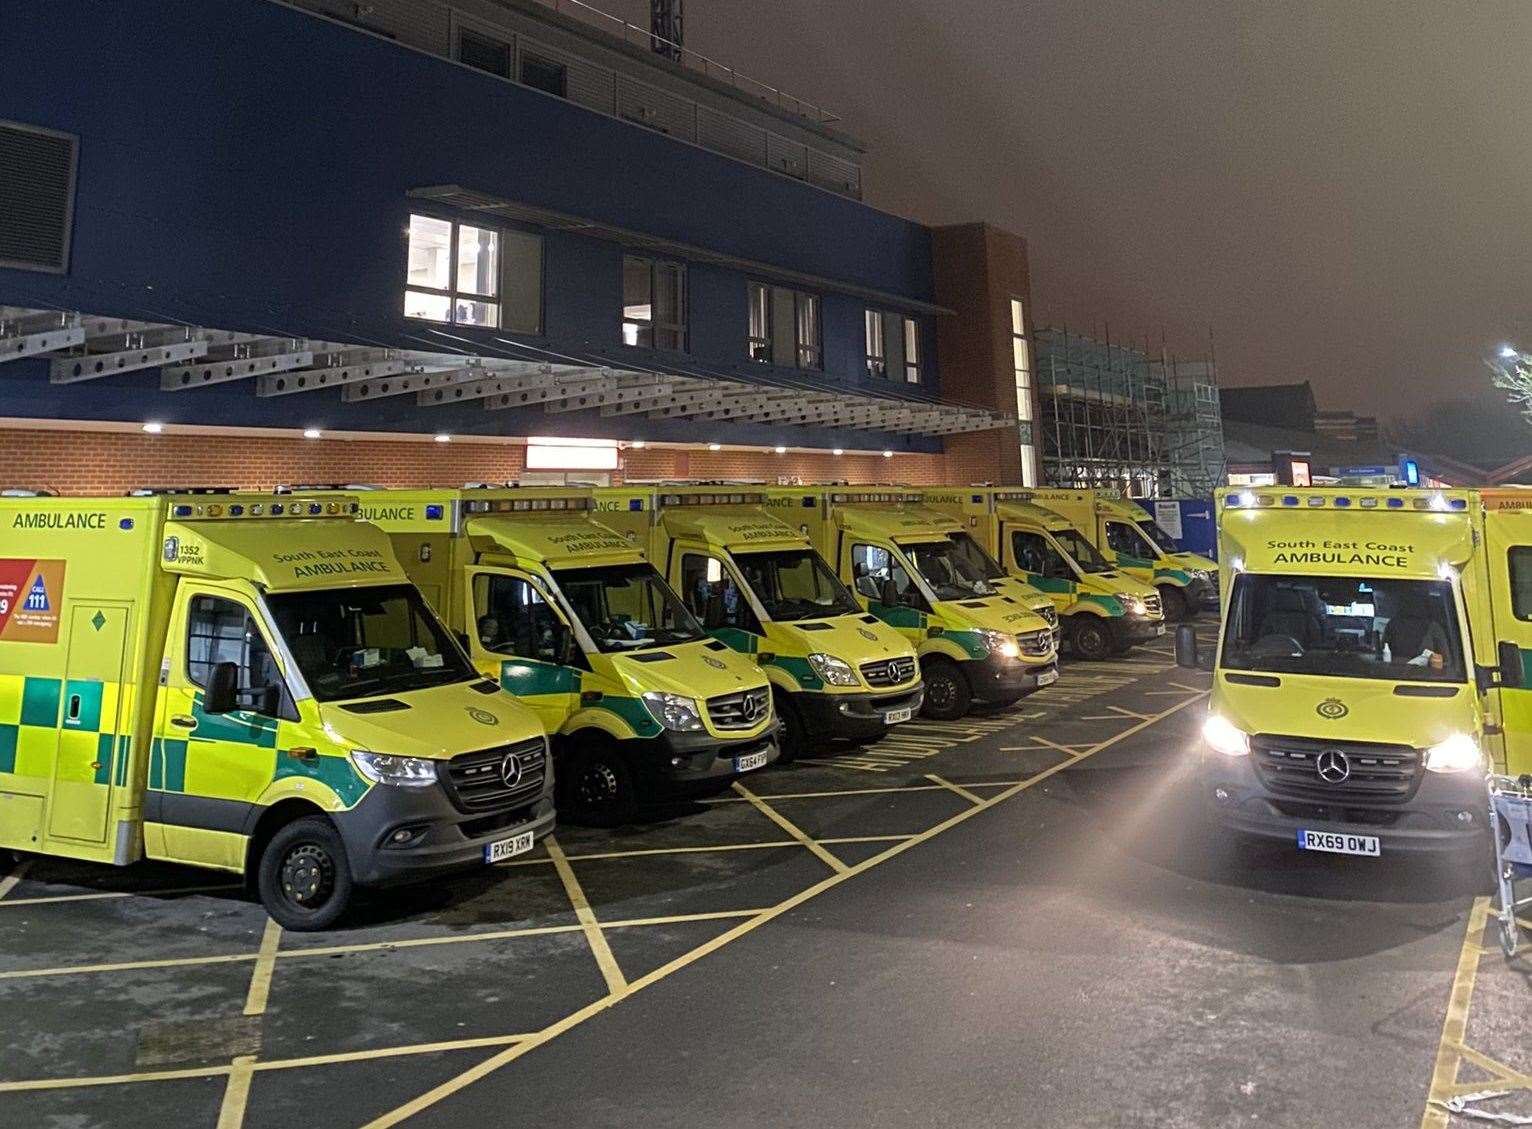 Ambulances waiting outside Medway hospital on December 29. Picture: Cameron Walker